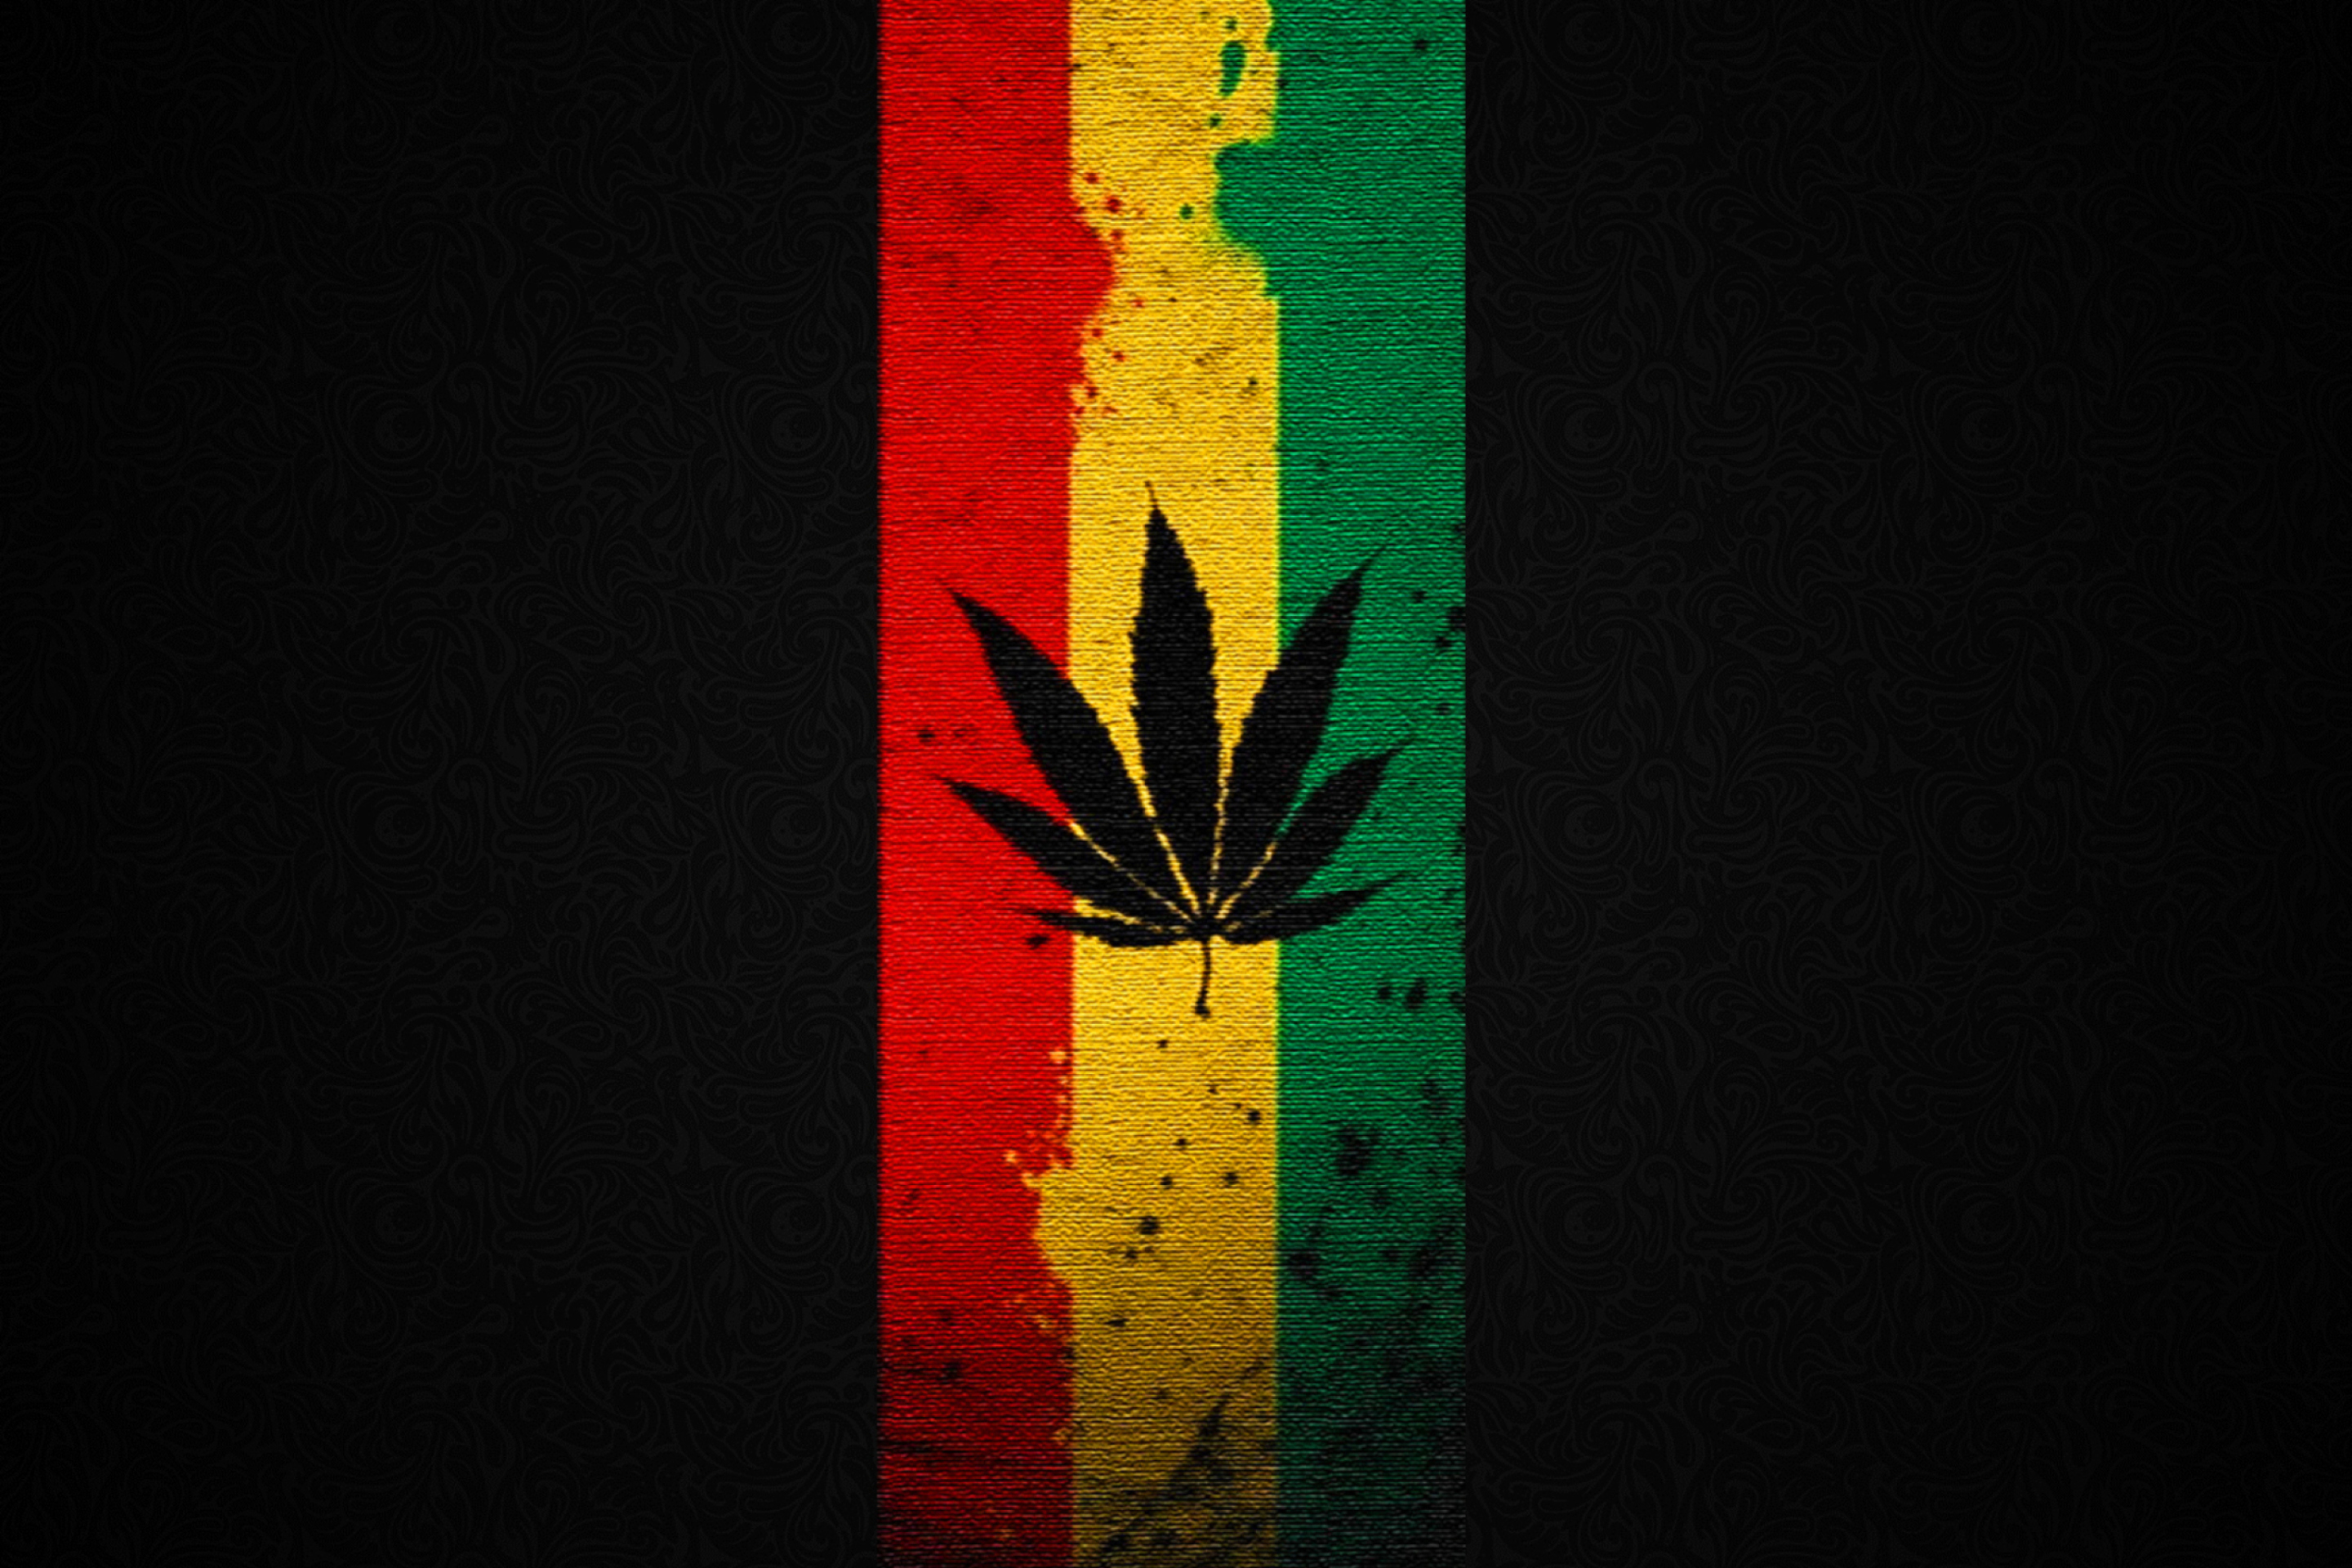 4 20 джа. Флаг растафари. Ямайка флаг растаманов. Ямайка флаг канабис. Боб марлей конопля Ямайка.